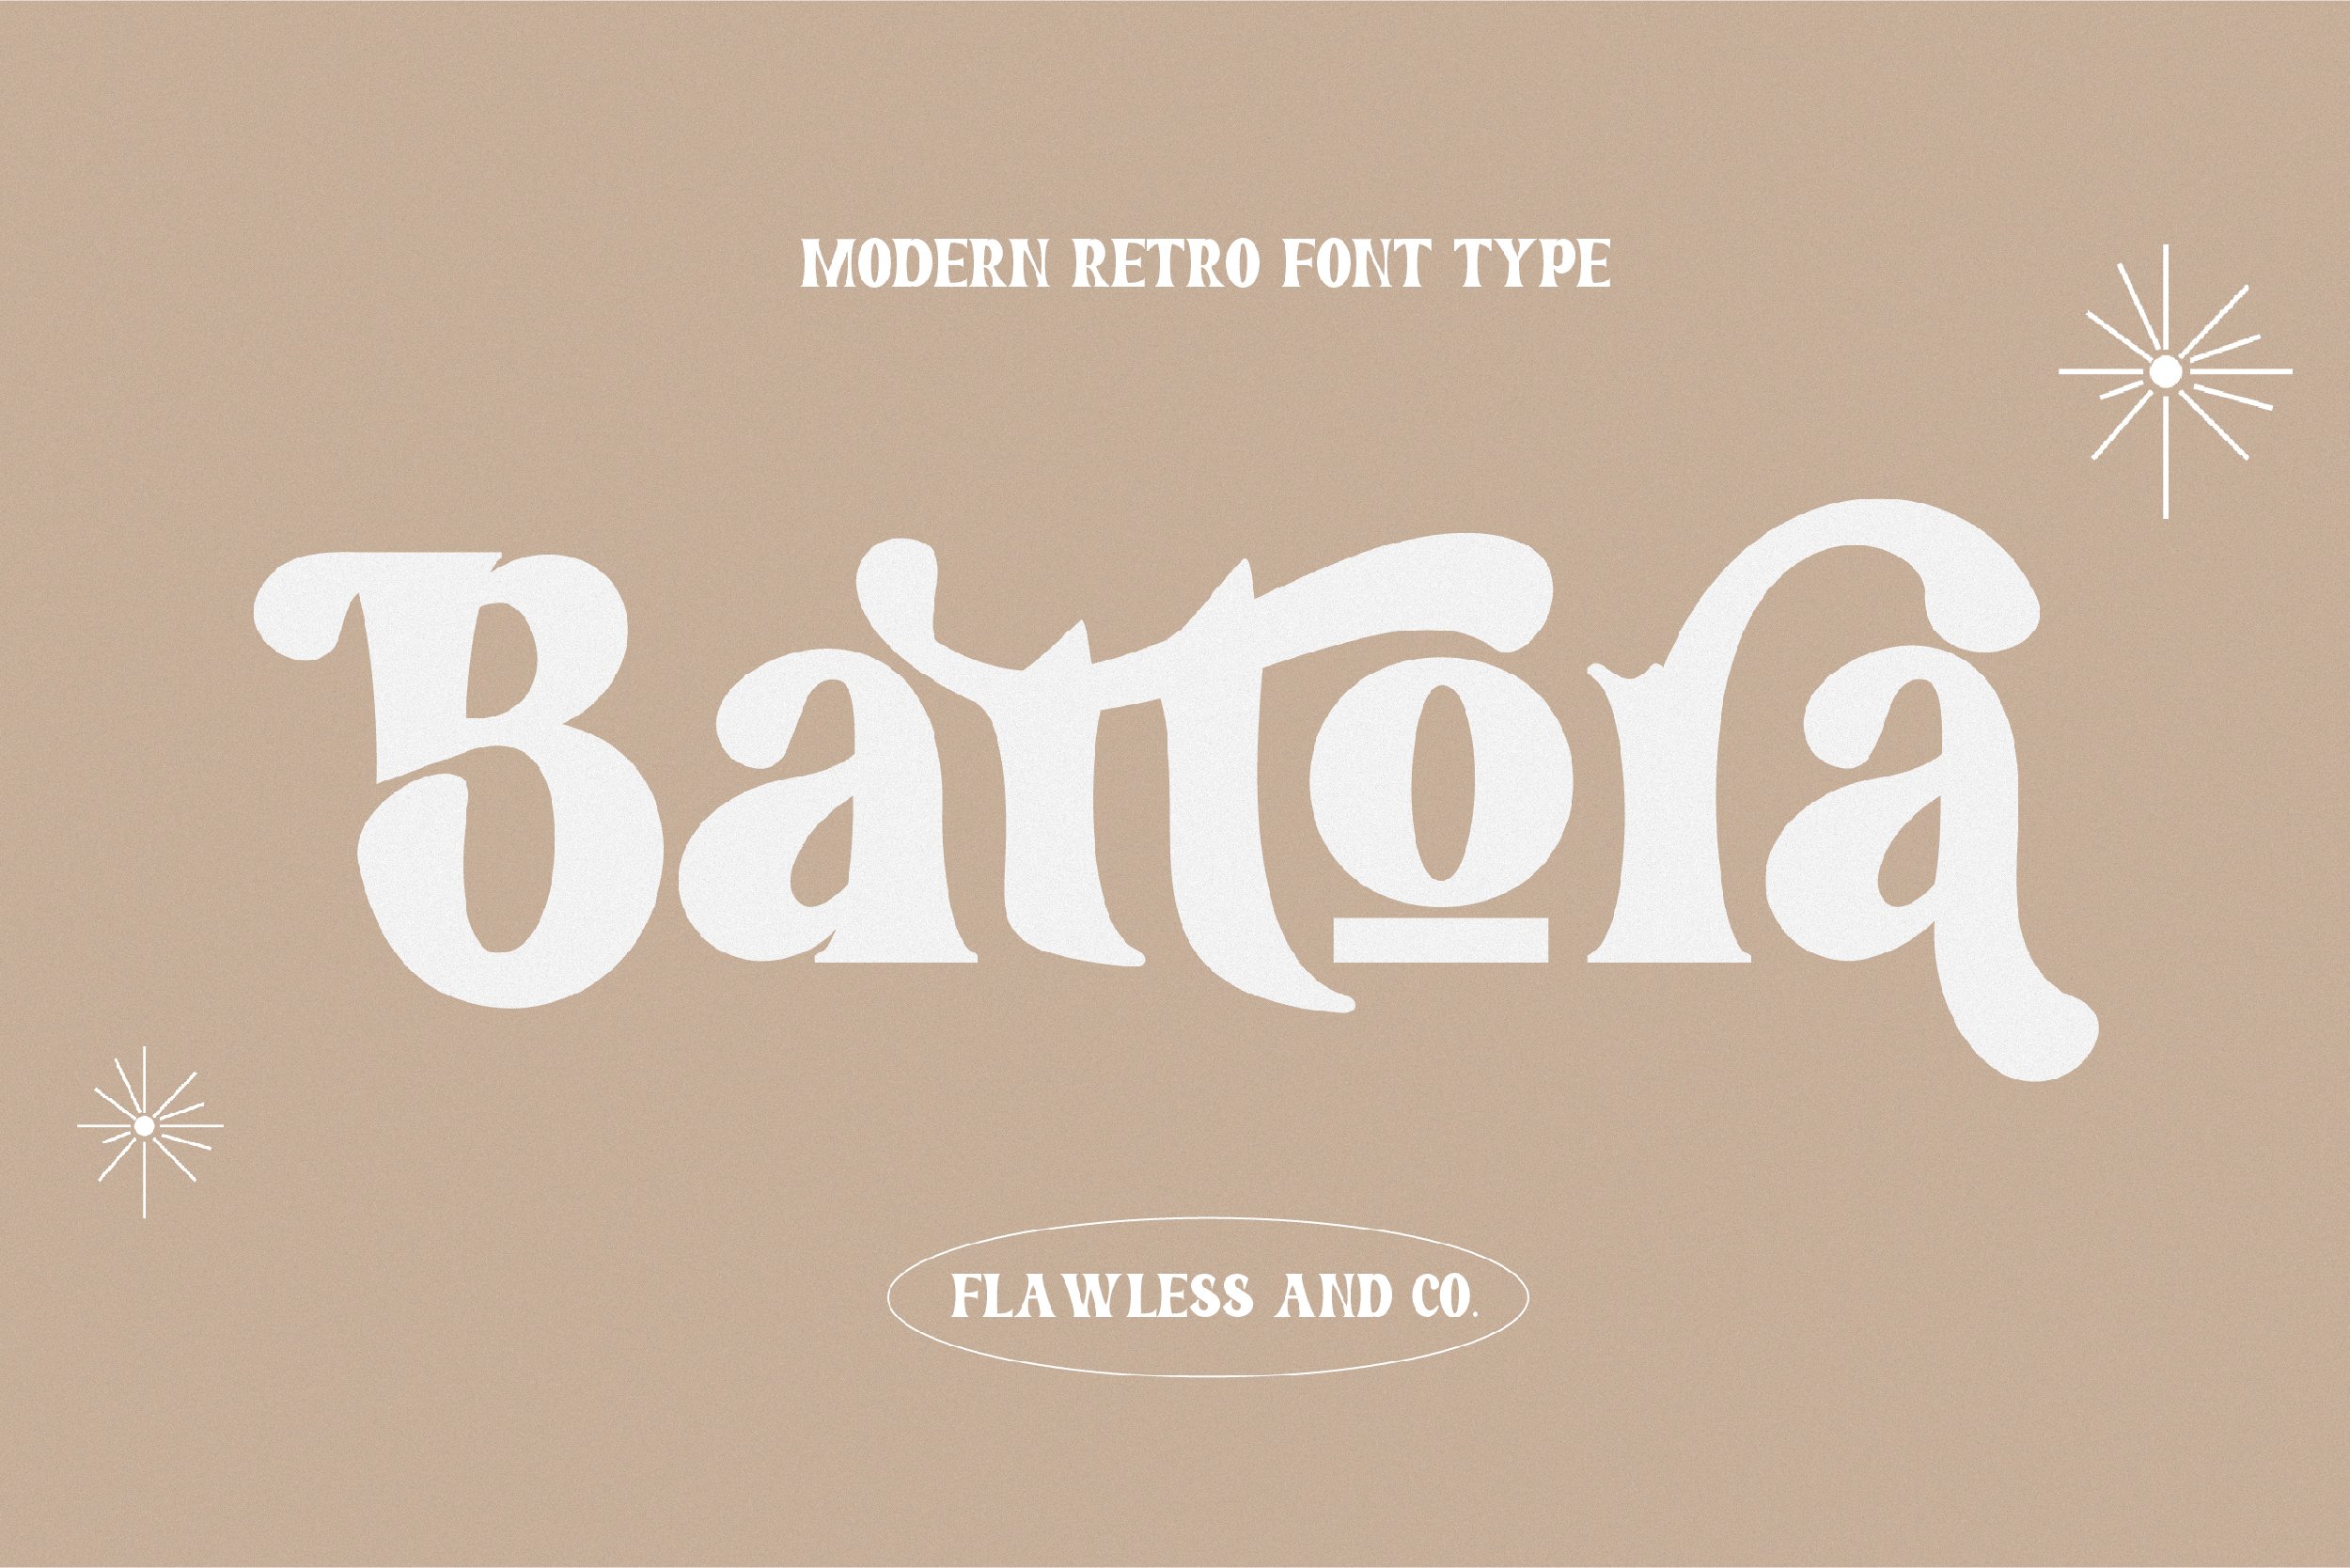 Battora - Modern Retro Font preview image.